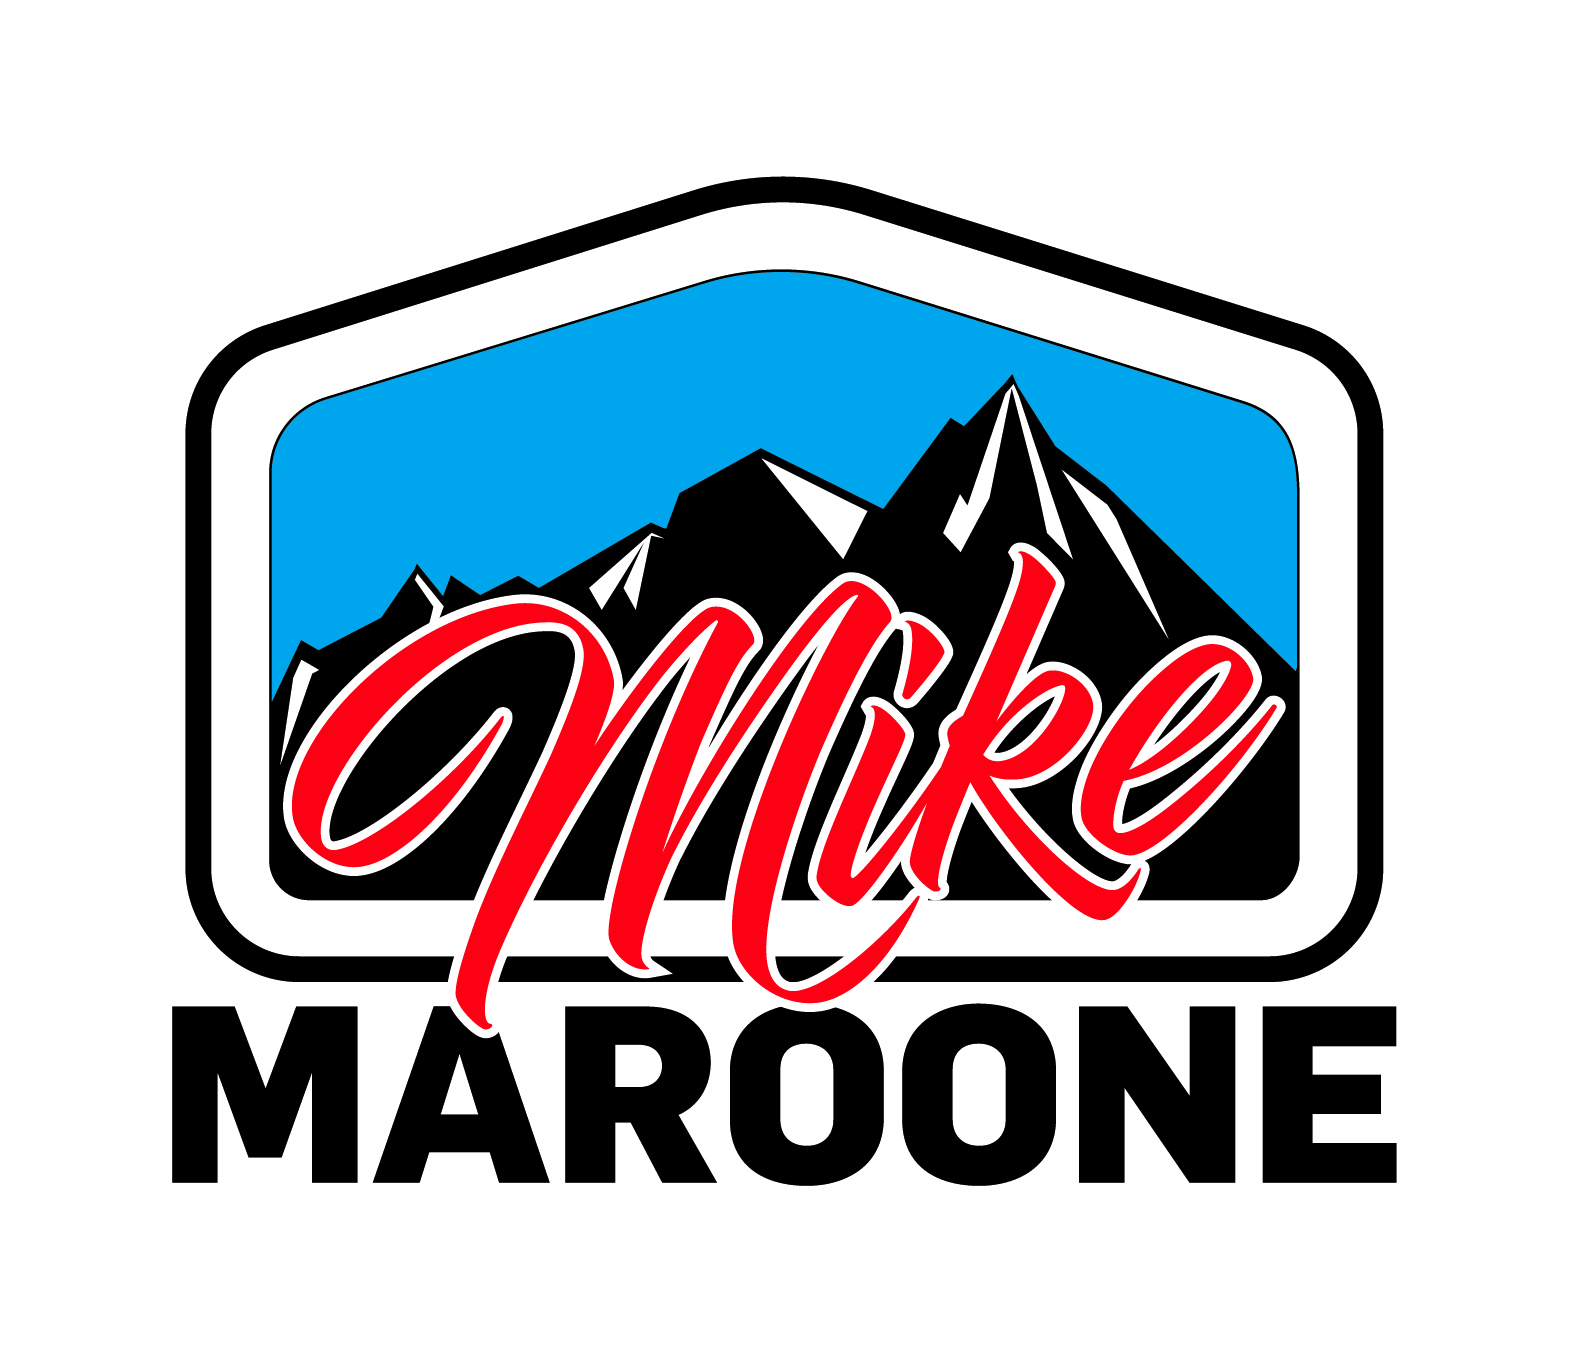 Mike Maroone Automotive